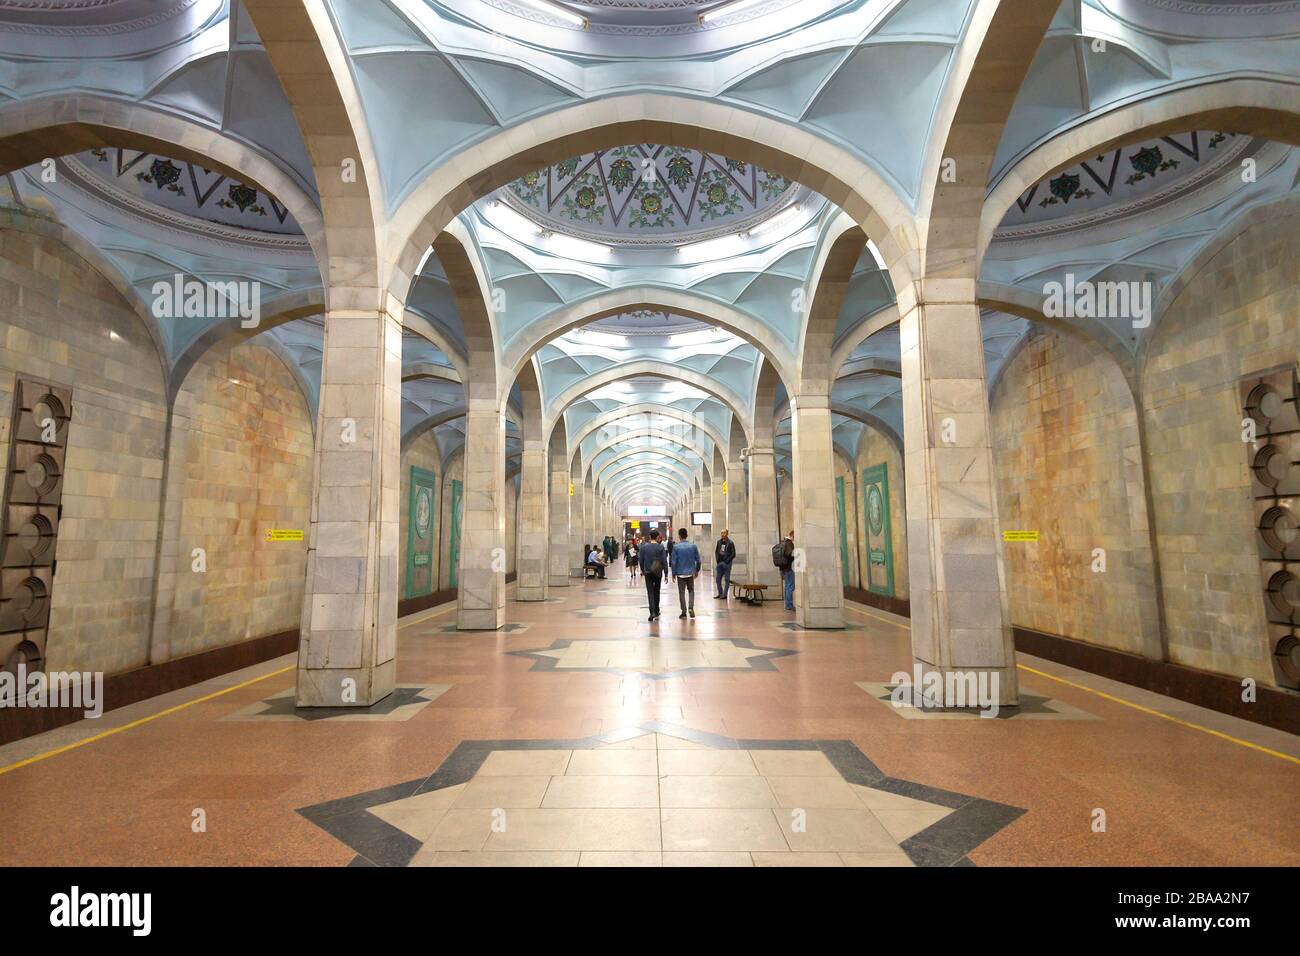 Alisher Navoi Metro station in Tashkent, Uzbekistan. In honor to the muslim poet of same name. Subway platform built with symmetrical domed ceiling. Stock Photo